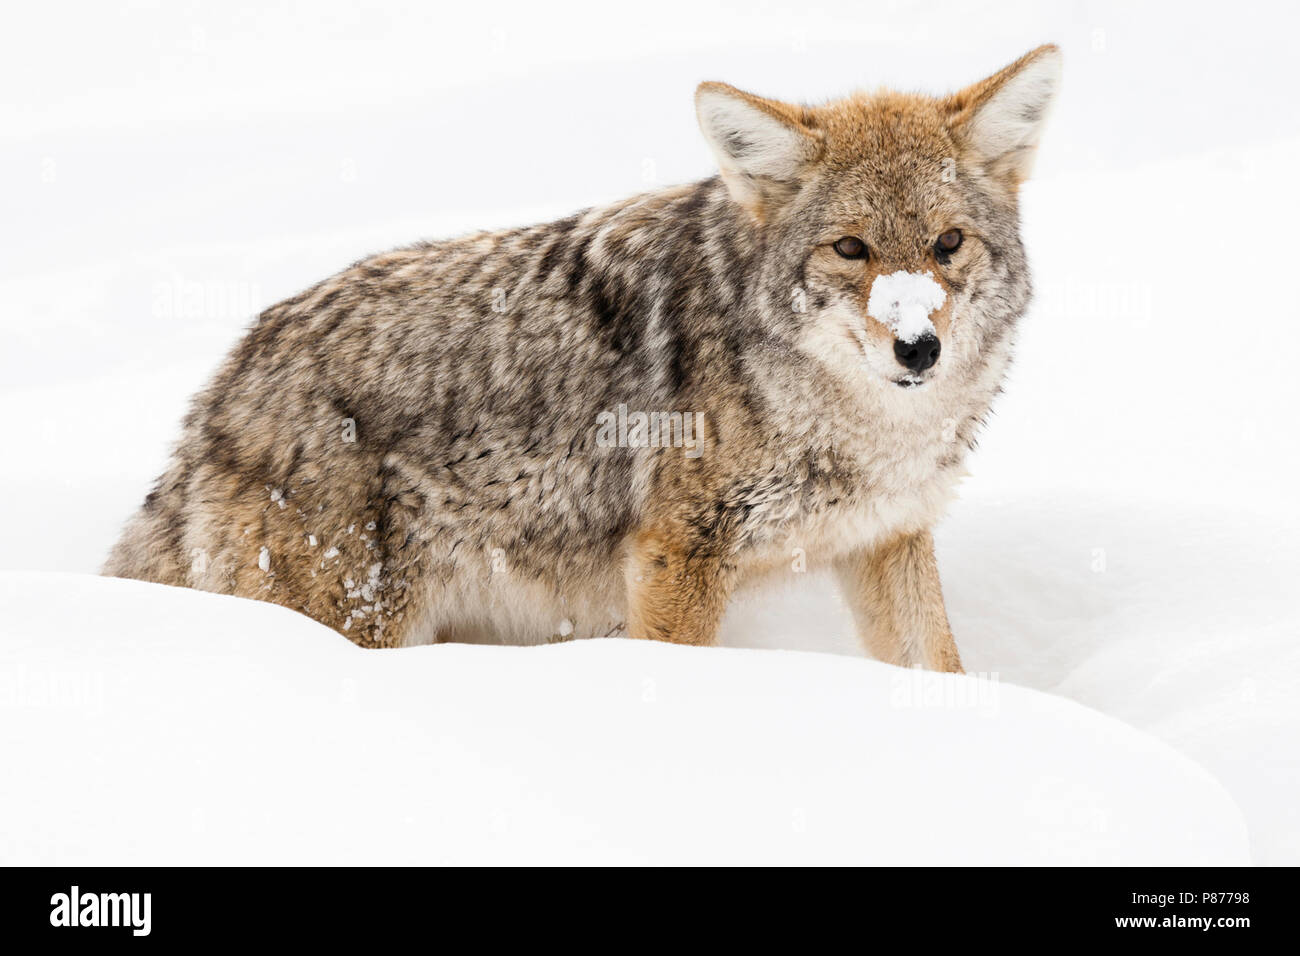 Dans staand Prairiewolf en Coyote ; debout dans la neige Banque D'Images